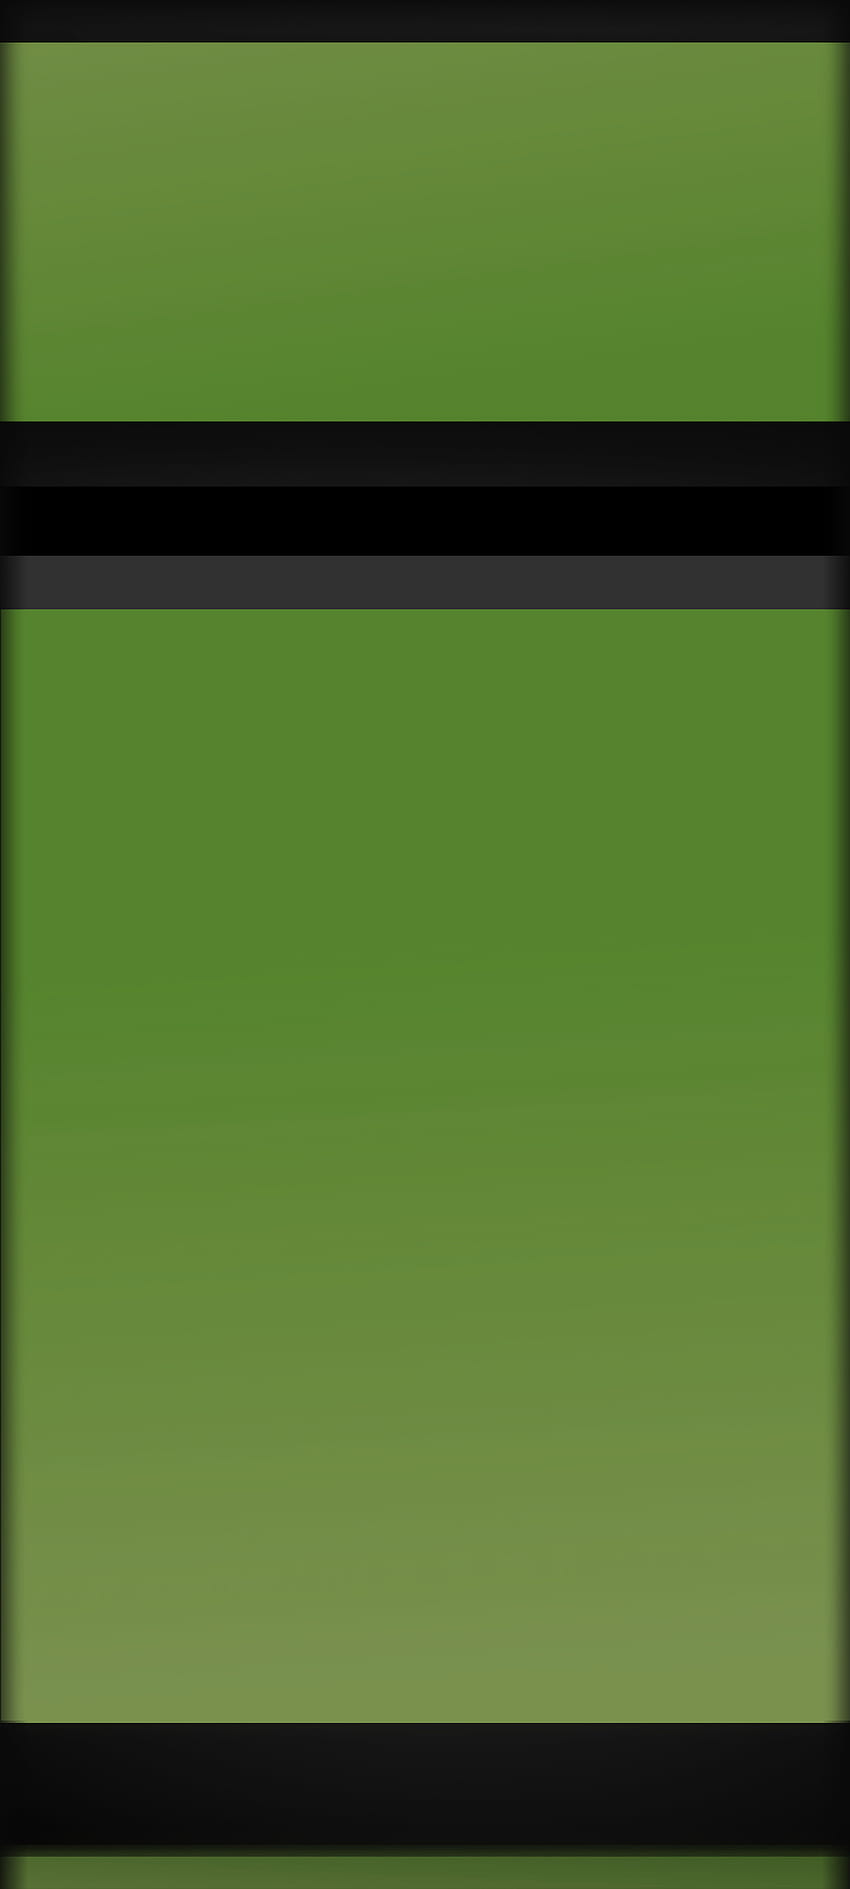 0-21 Vintage Green, Samsung Galaxy, Karya Seni, Pemenang Penghargaan, Keren, Definisi Tinggi, Super, Layar Terkunci, , Spesial, S20.Android13 Baru, A51, Druffix, Gigaset, Apple iPhone, 2021, iPhoneX, M32, Magma, Modern Gaya, 5G, Cinta, kontras, Edge, Nokia wallpaper ponsel HD